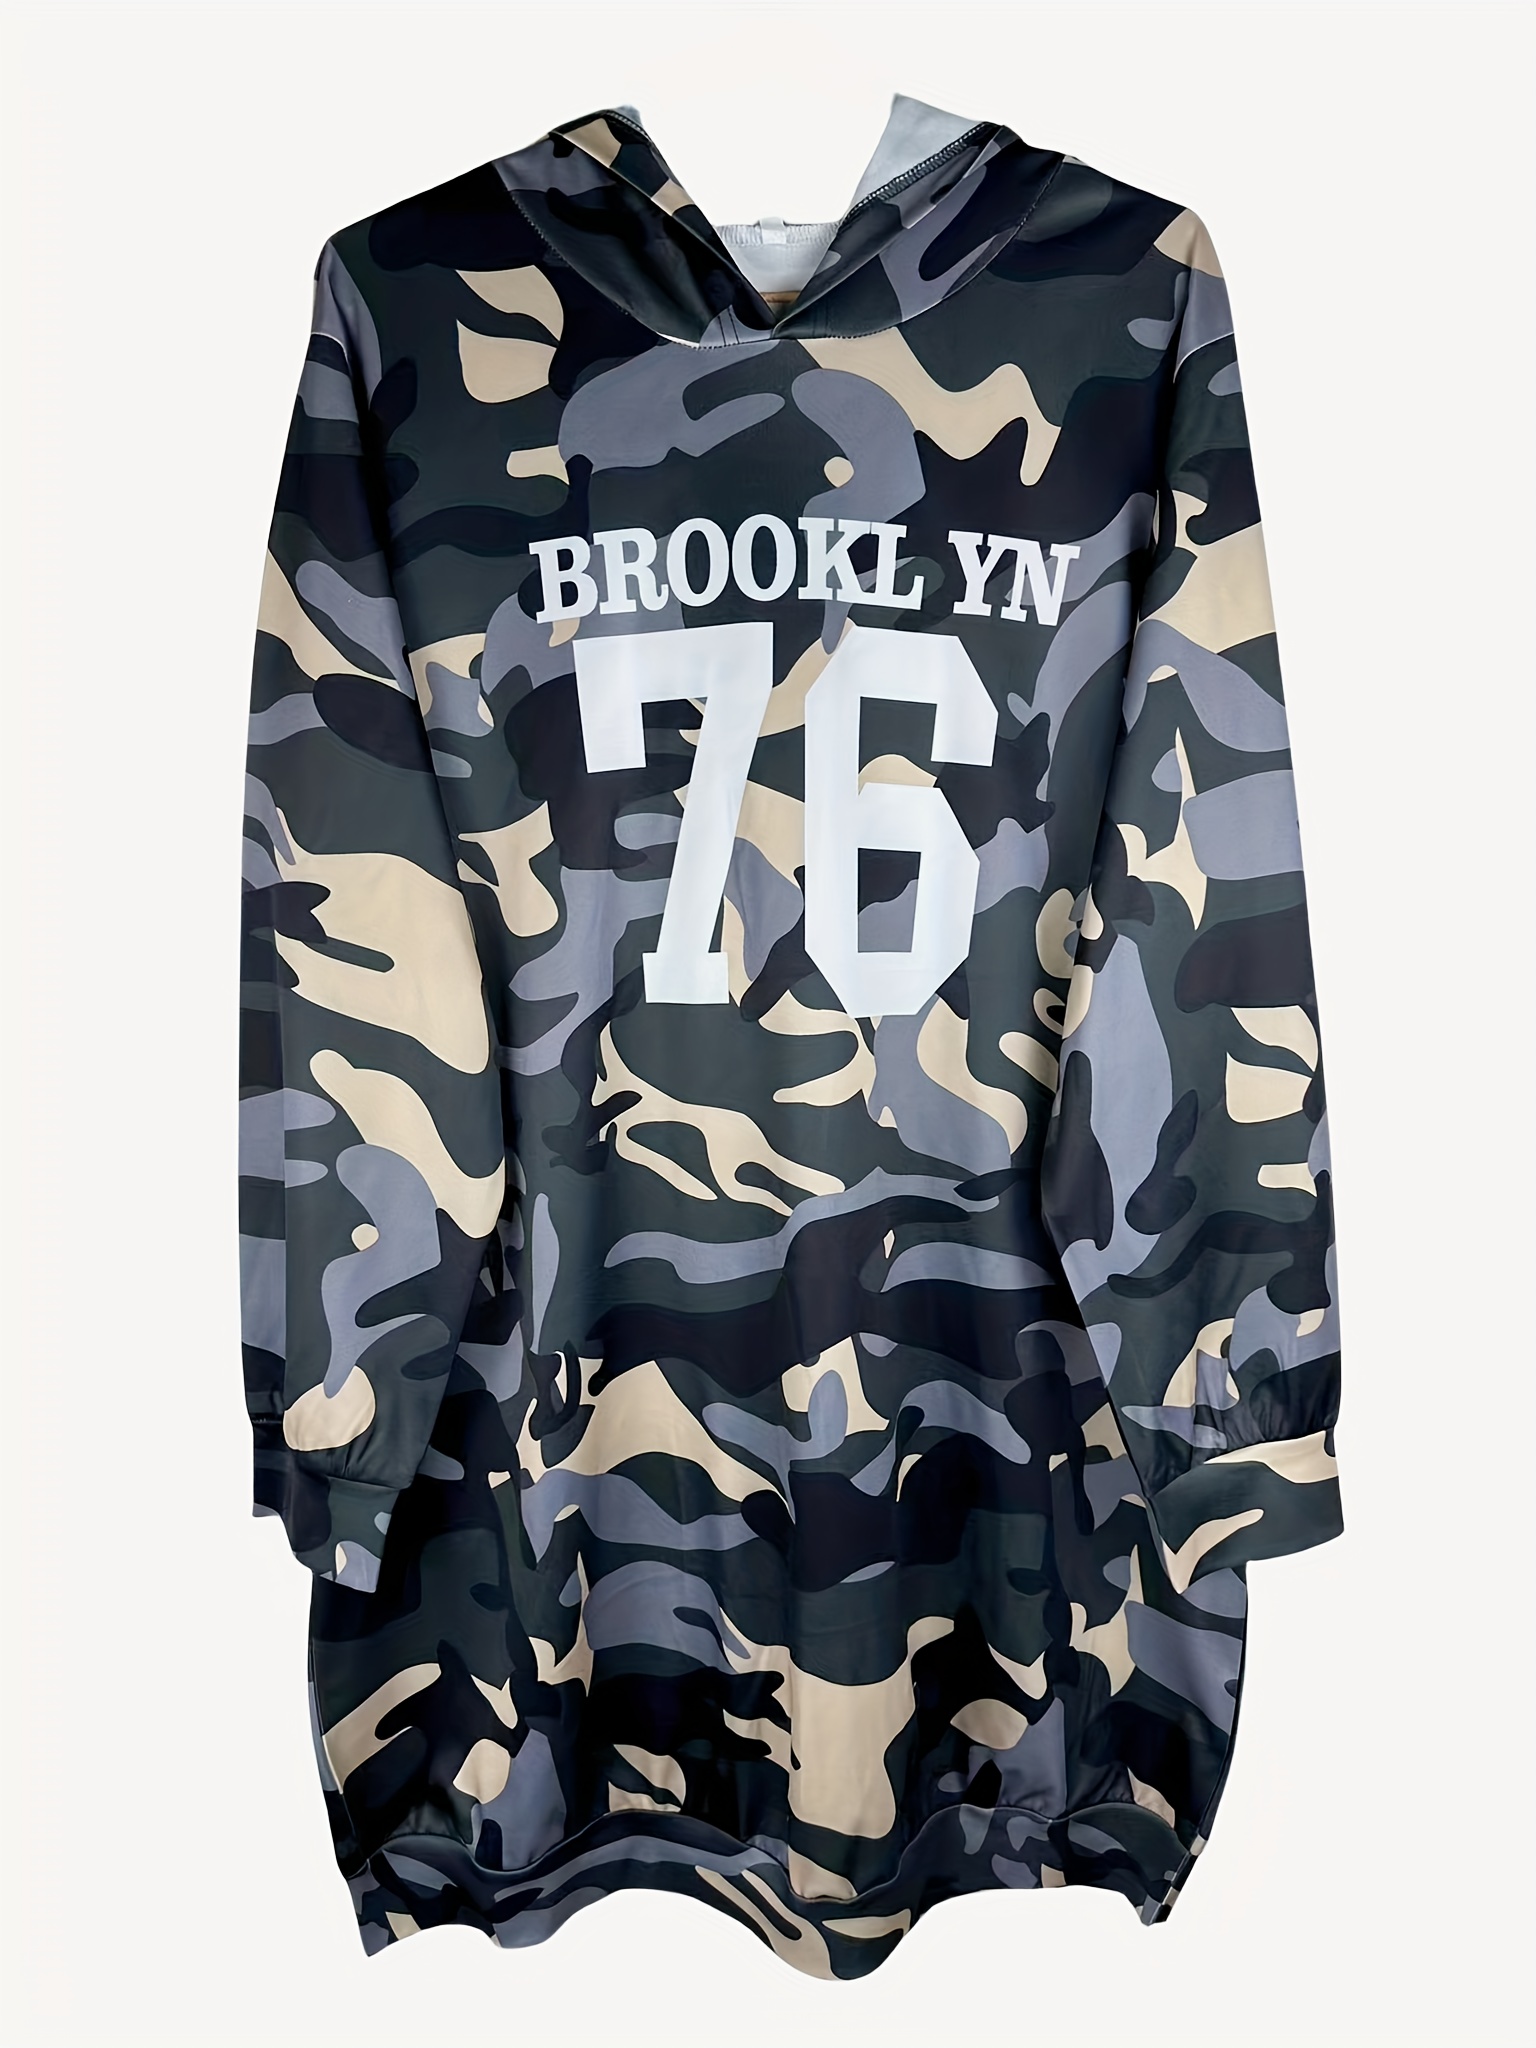 Plus Brooklyn New York Printed Sweat Dress